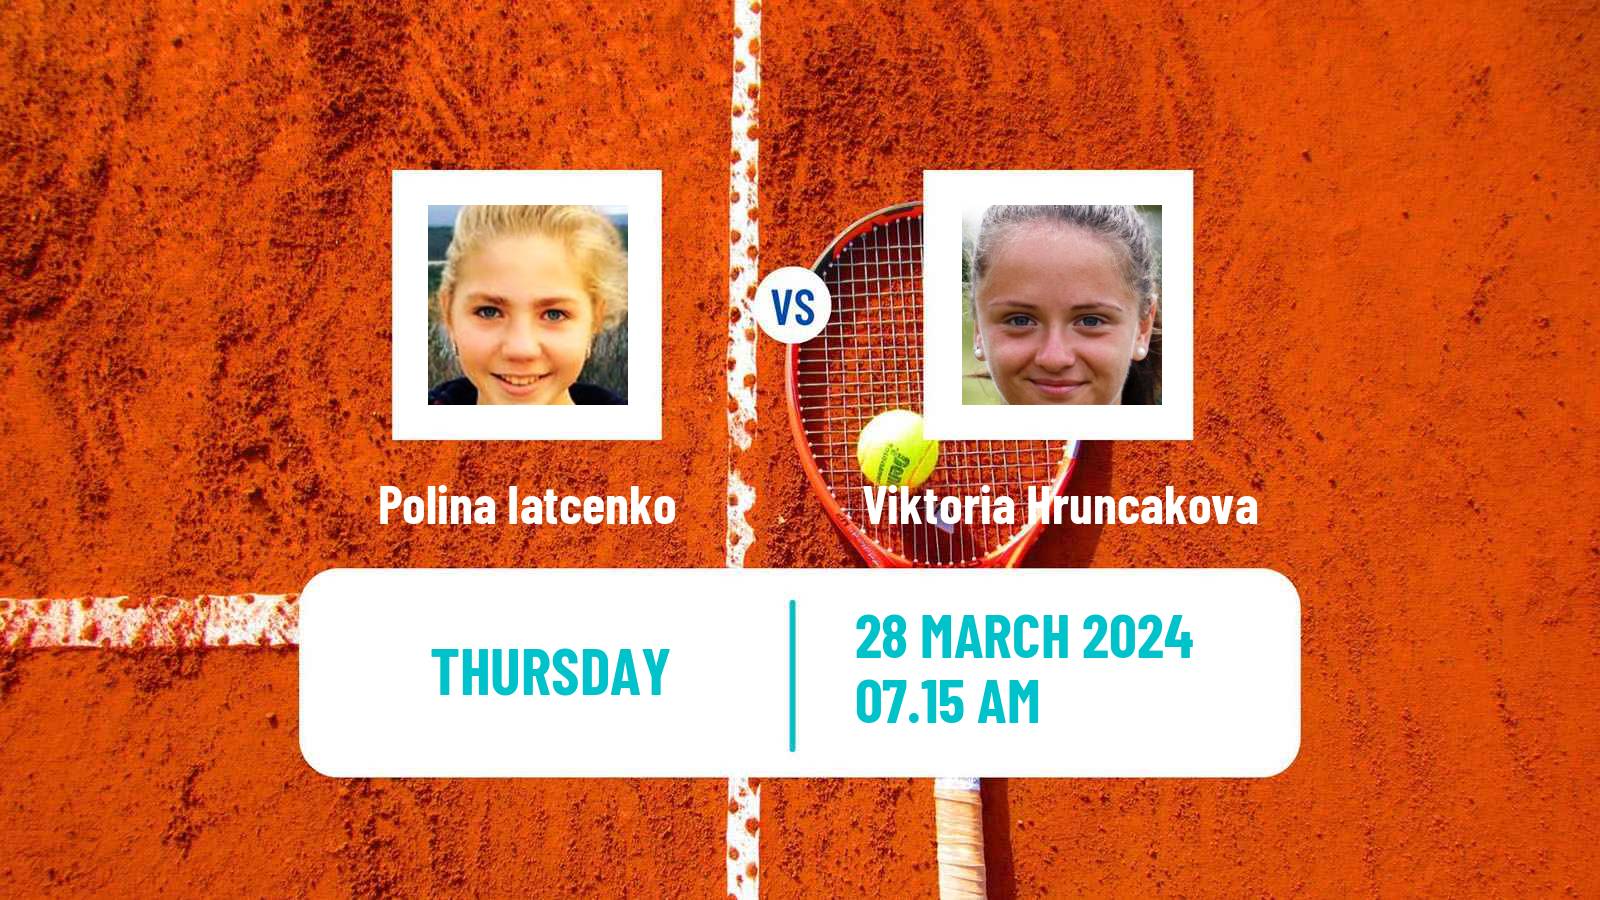 Tennis ITF W50 Murska Sobota Women Polina Iatcenko - Viktoria Hruncakova